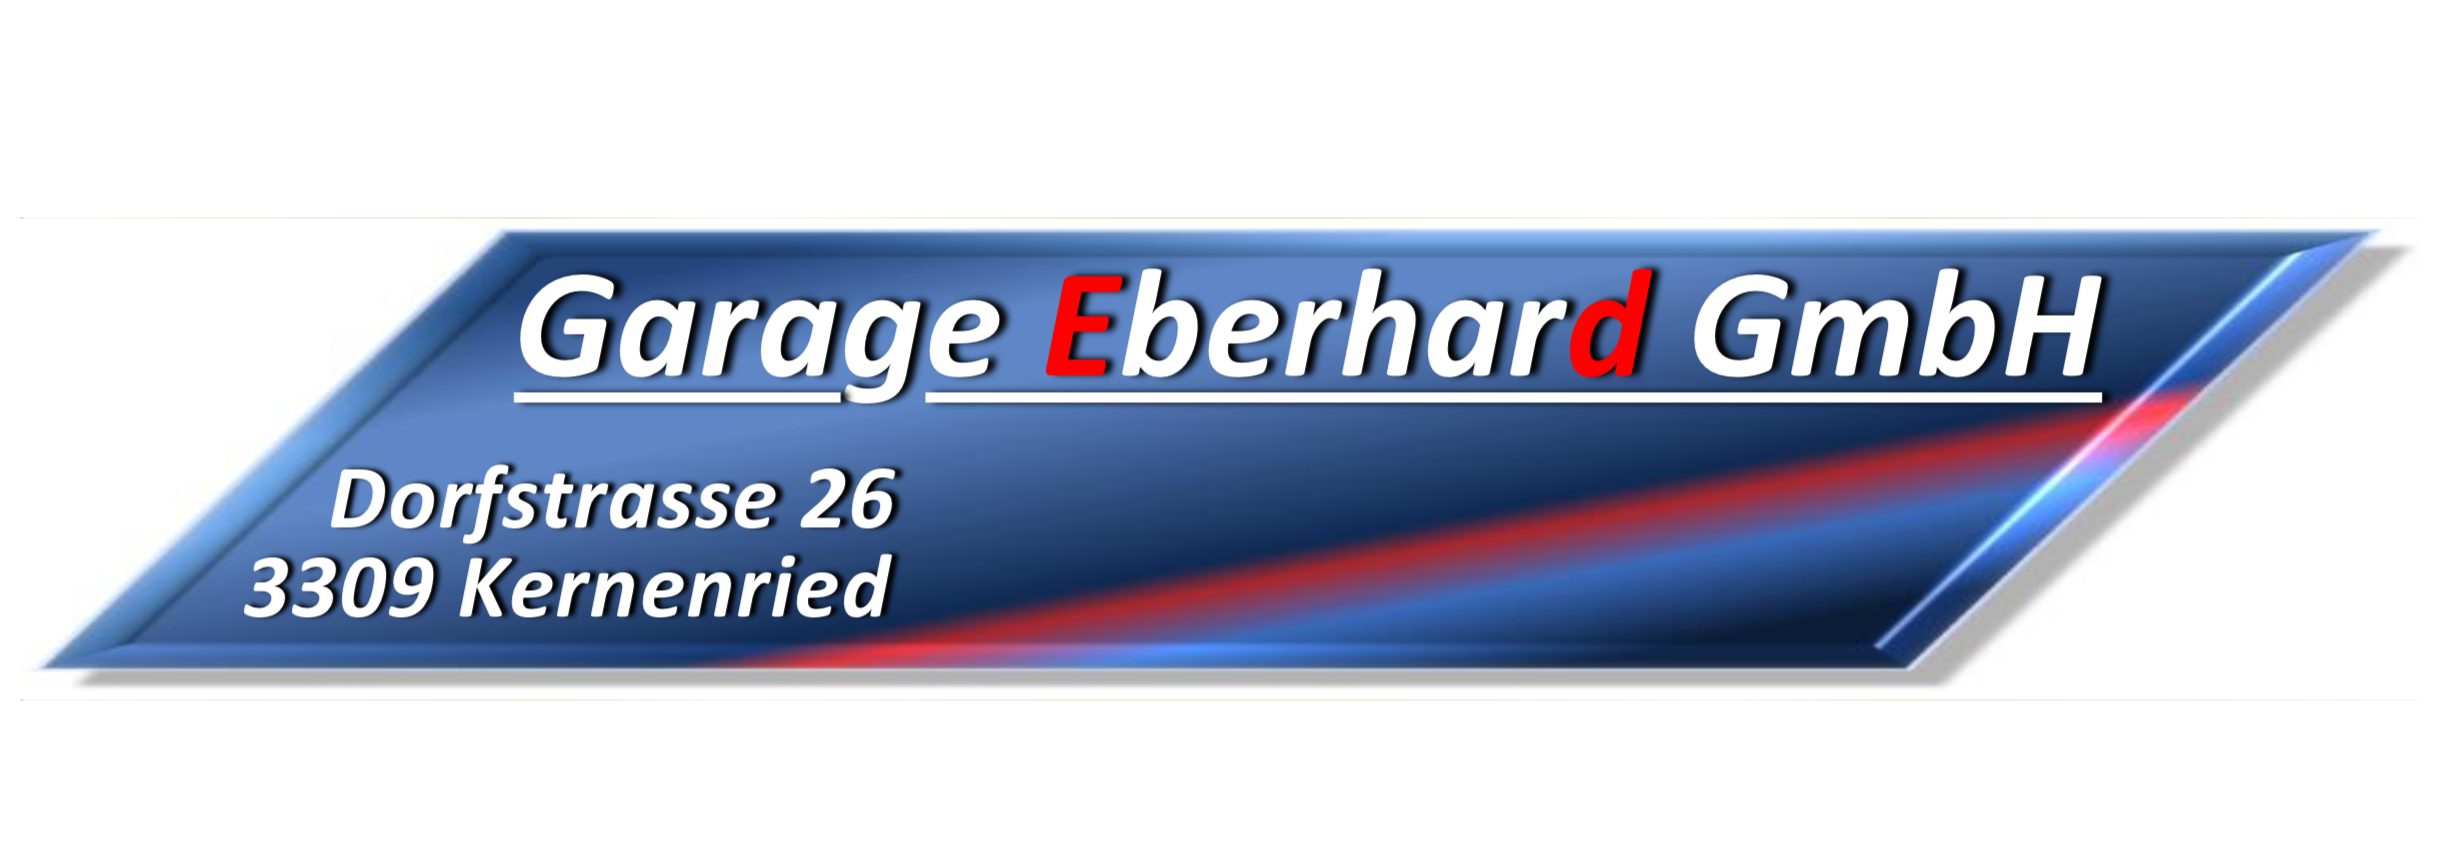 Garage Eberhard GmbH